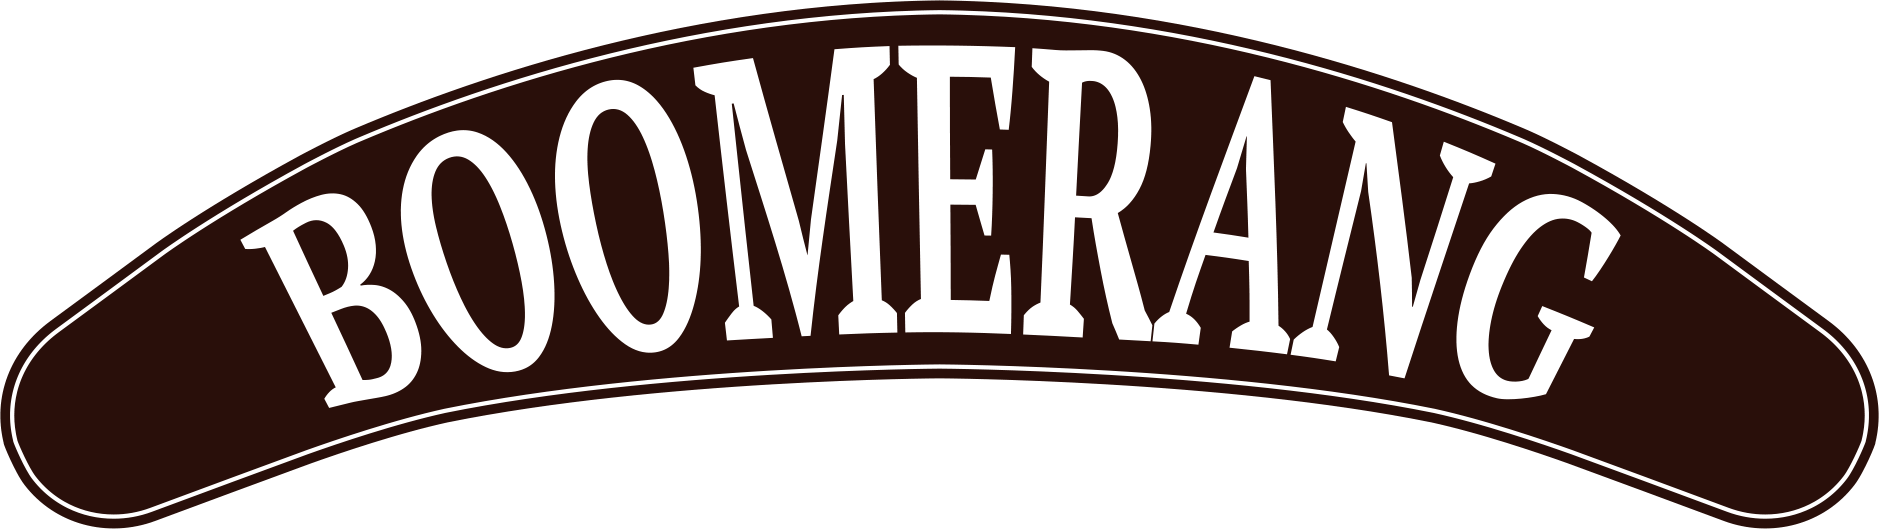 Boomerang - Birreria Pizzeria Ristorante Pub a Rimini e Santarcangelo | logo